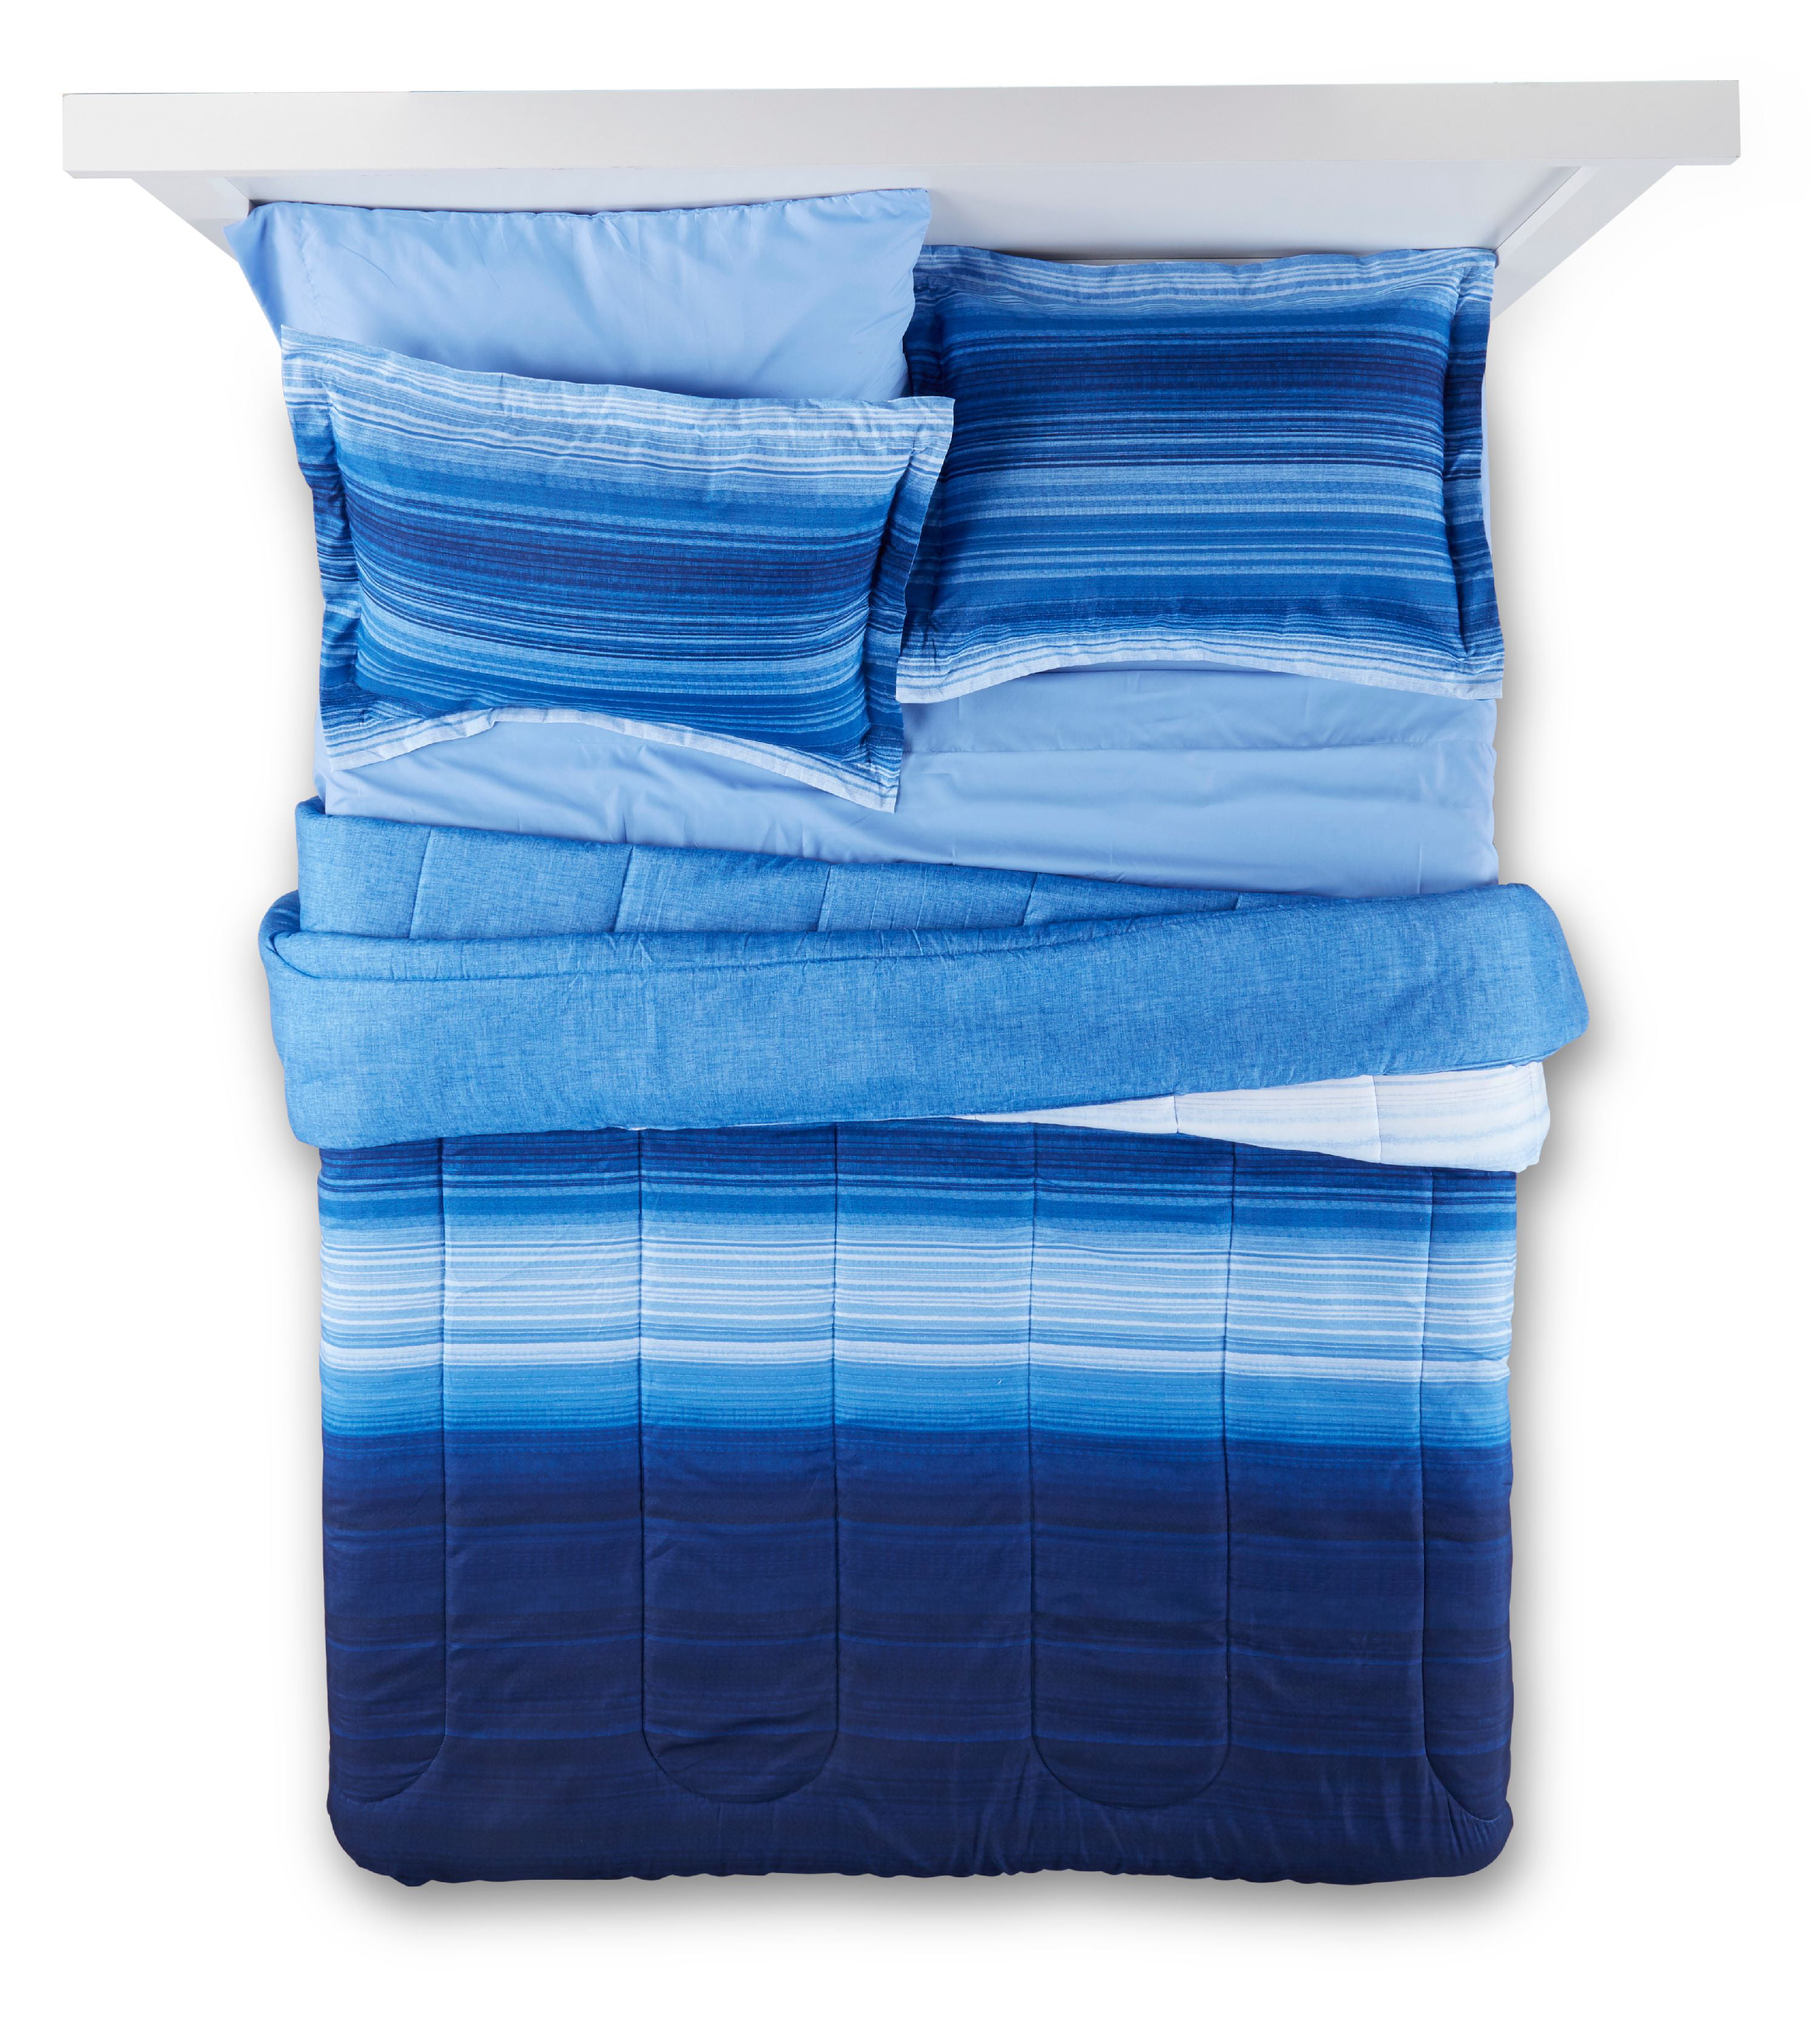 Mainstays Ombre Blue Bed in a Bag Bedding, Queen, Blue - Walmart.com ...